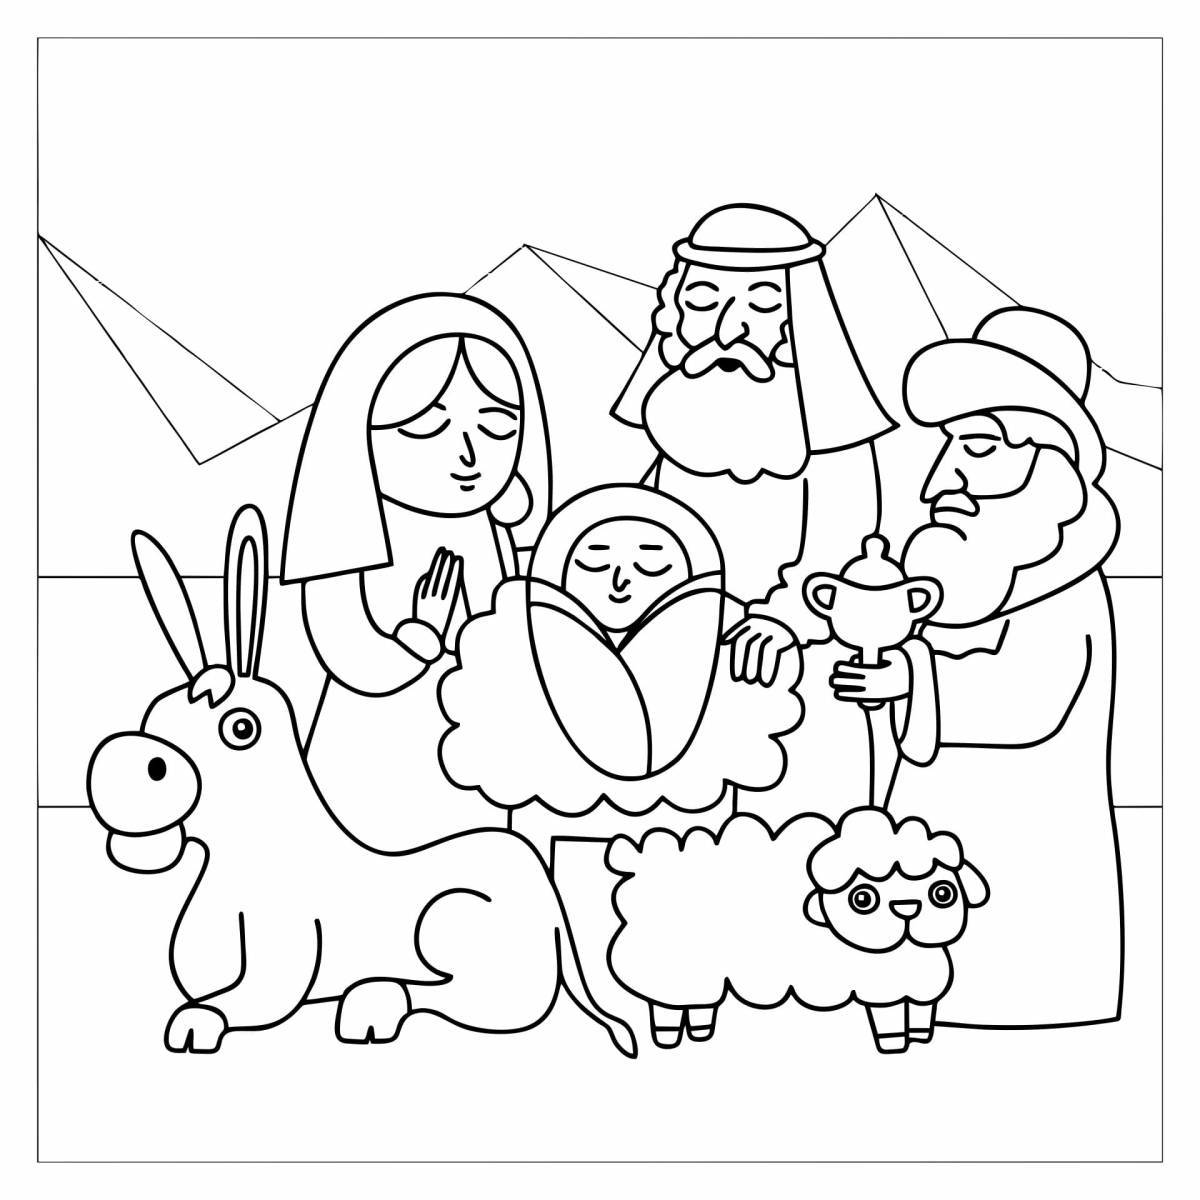 Nativity scene glowing coloring book